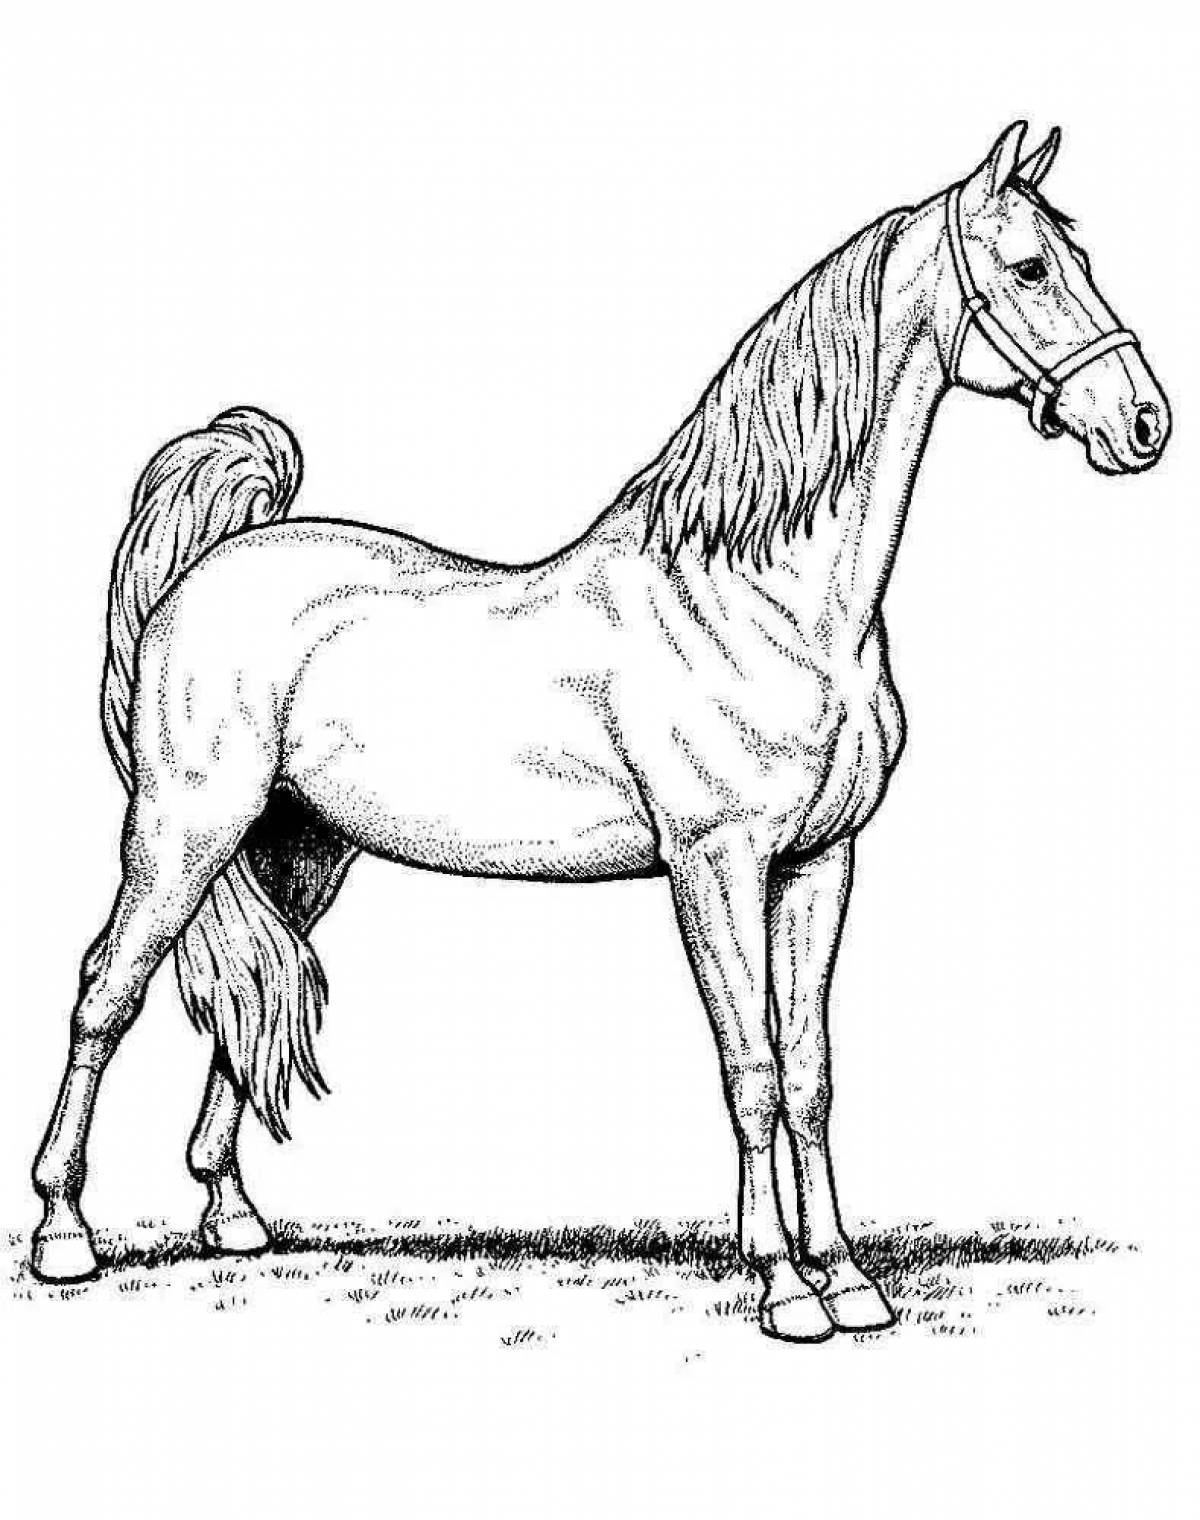 Раскраска величественная аппалуза лошадь